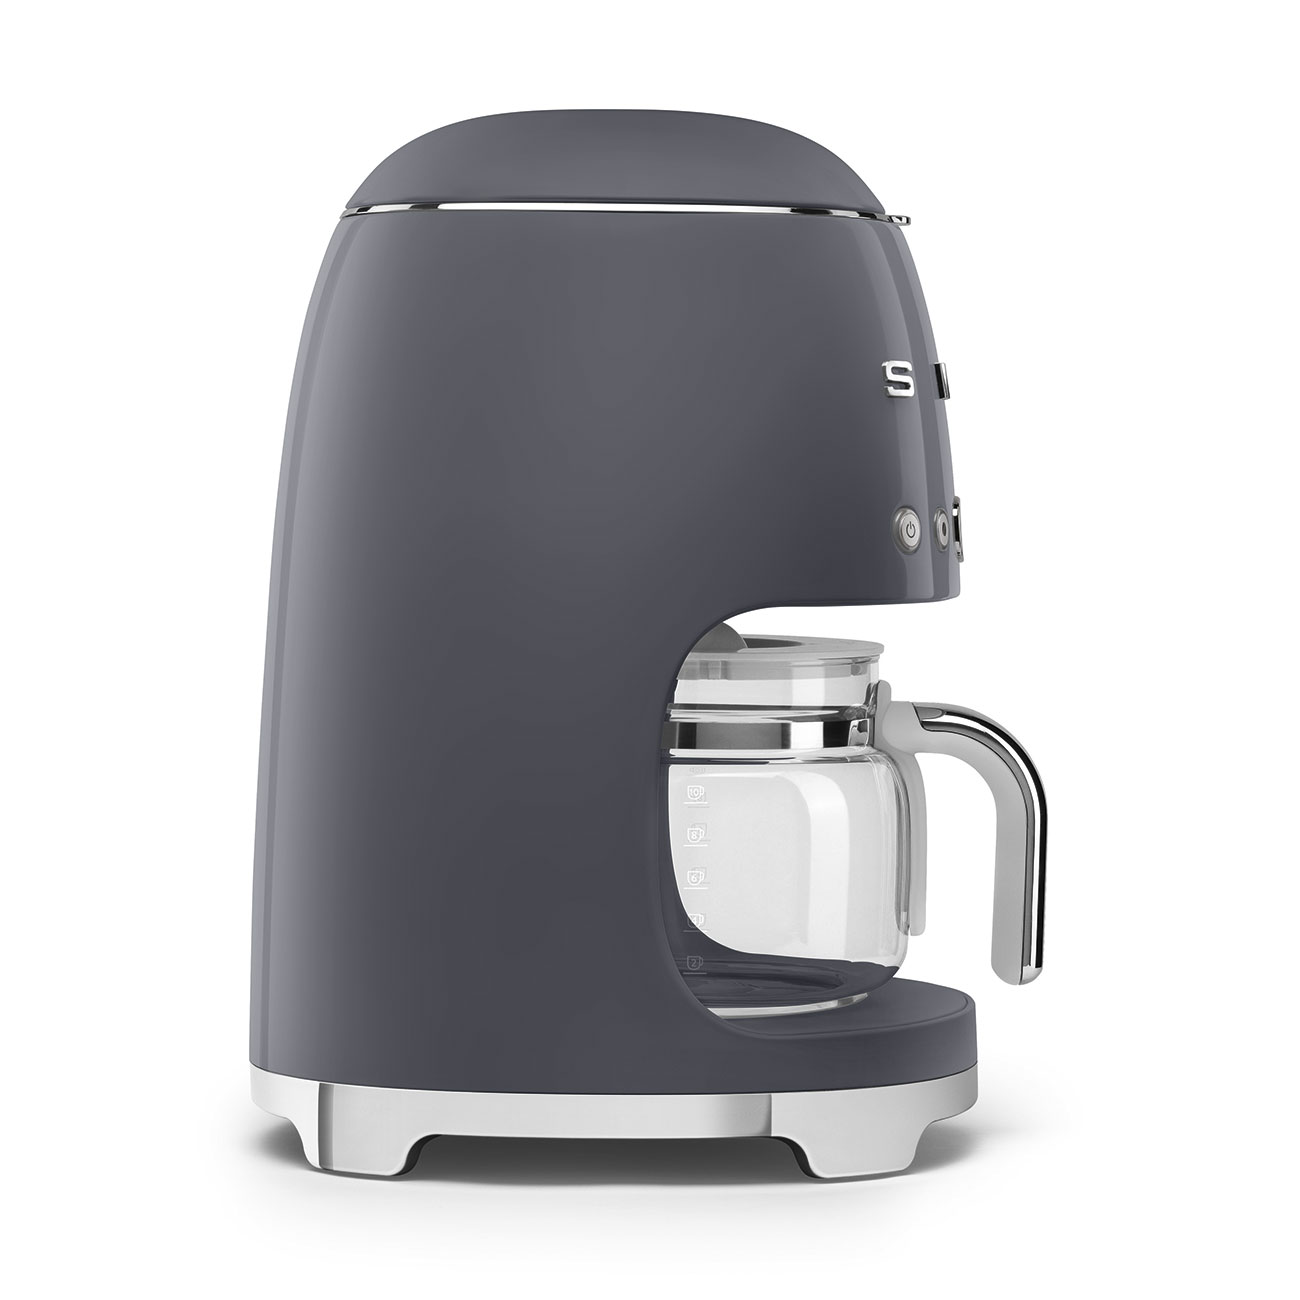 Slate Grey Drip Filter Coffee Machine - DCF02GRUK - Smeg_3